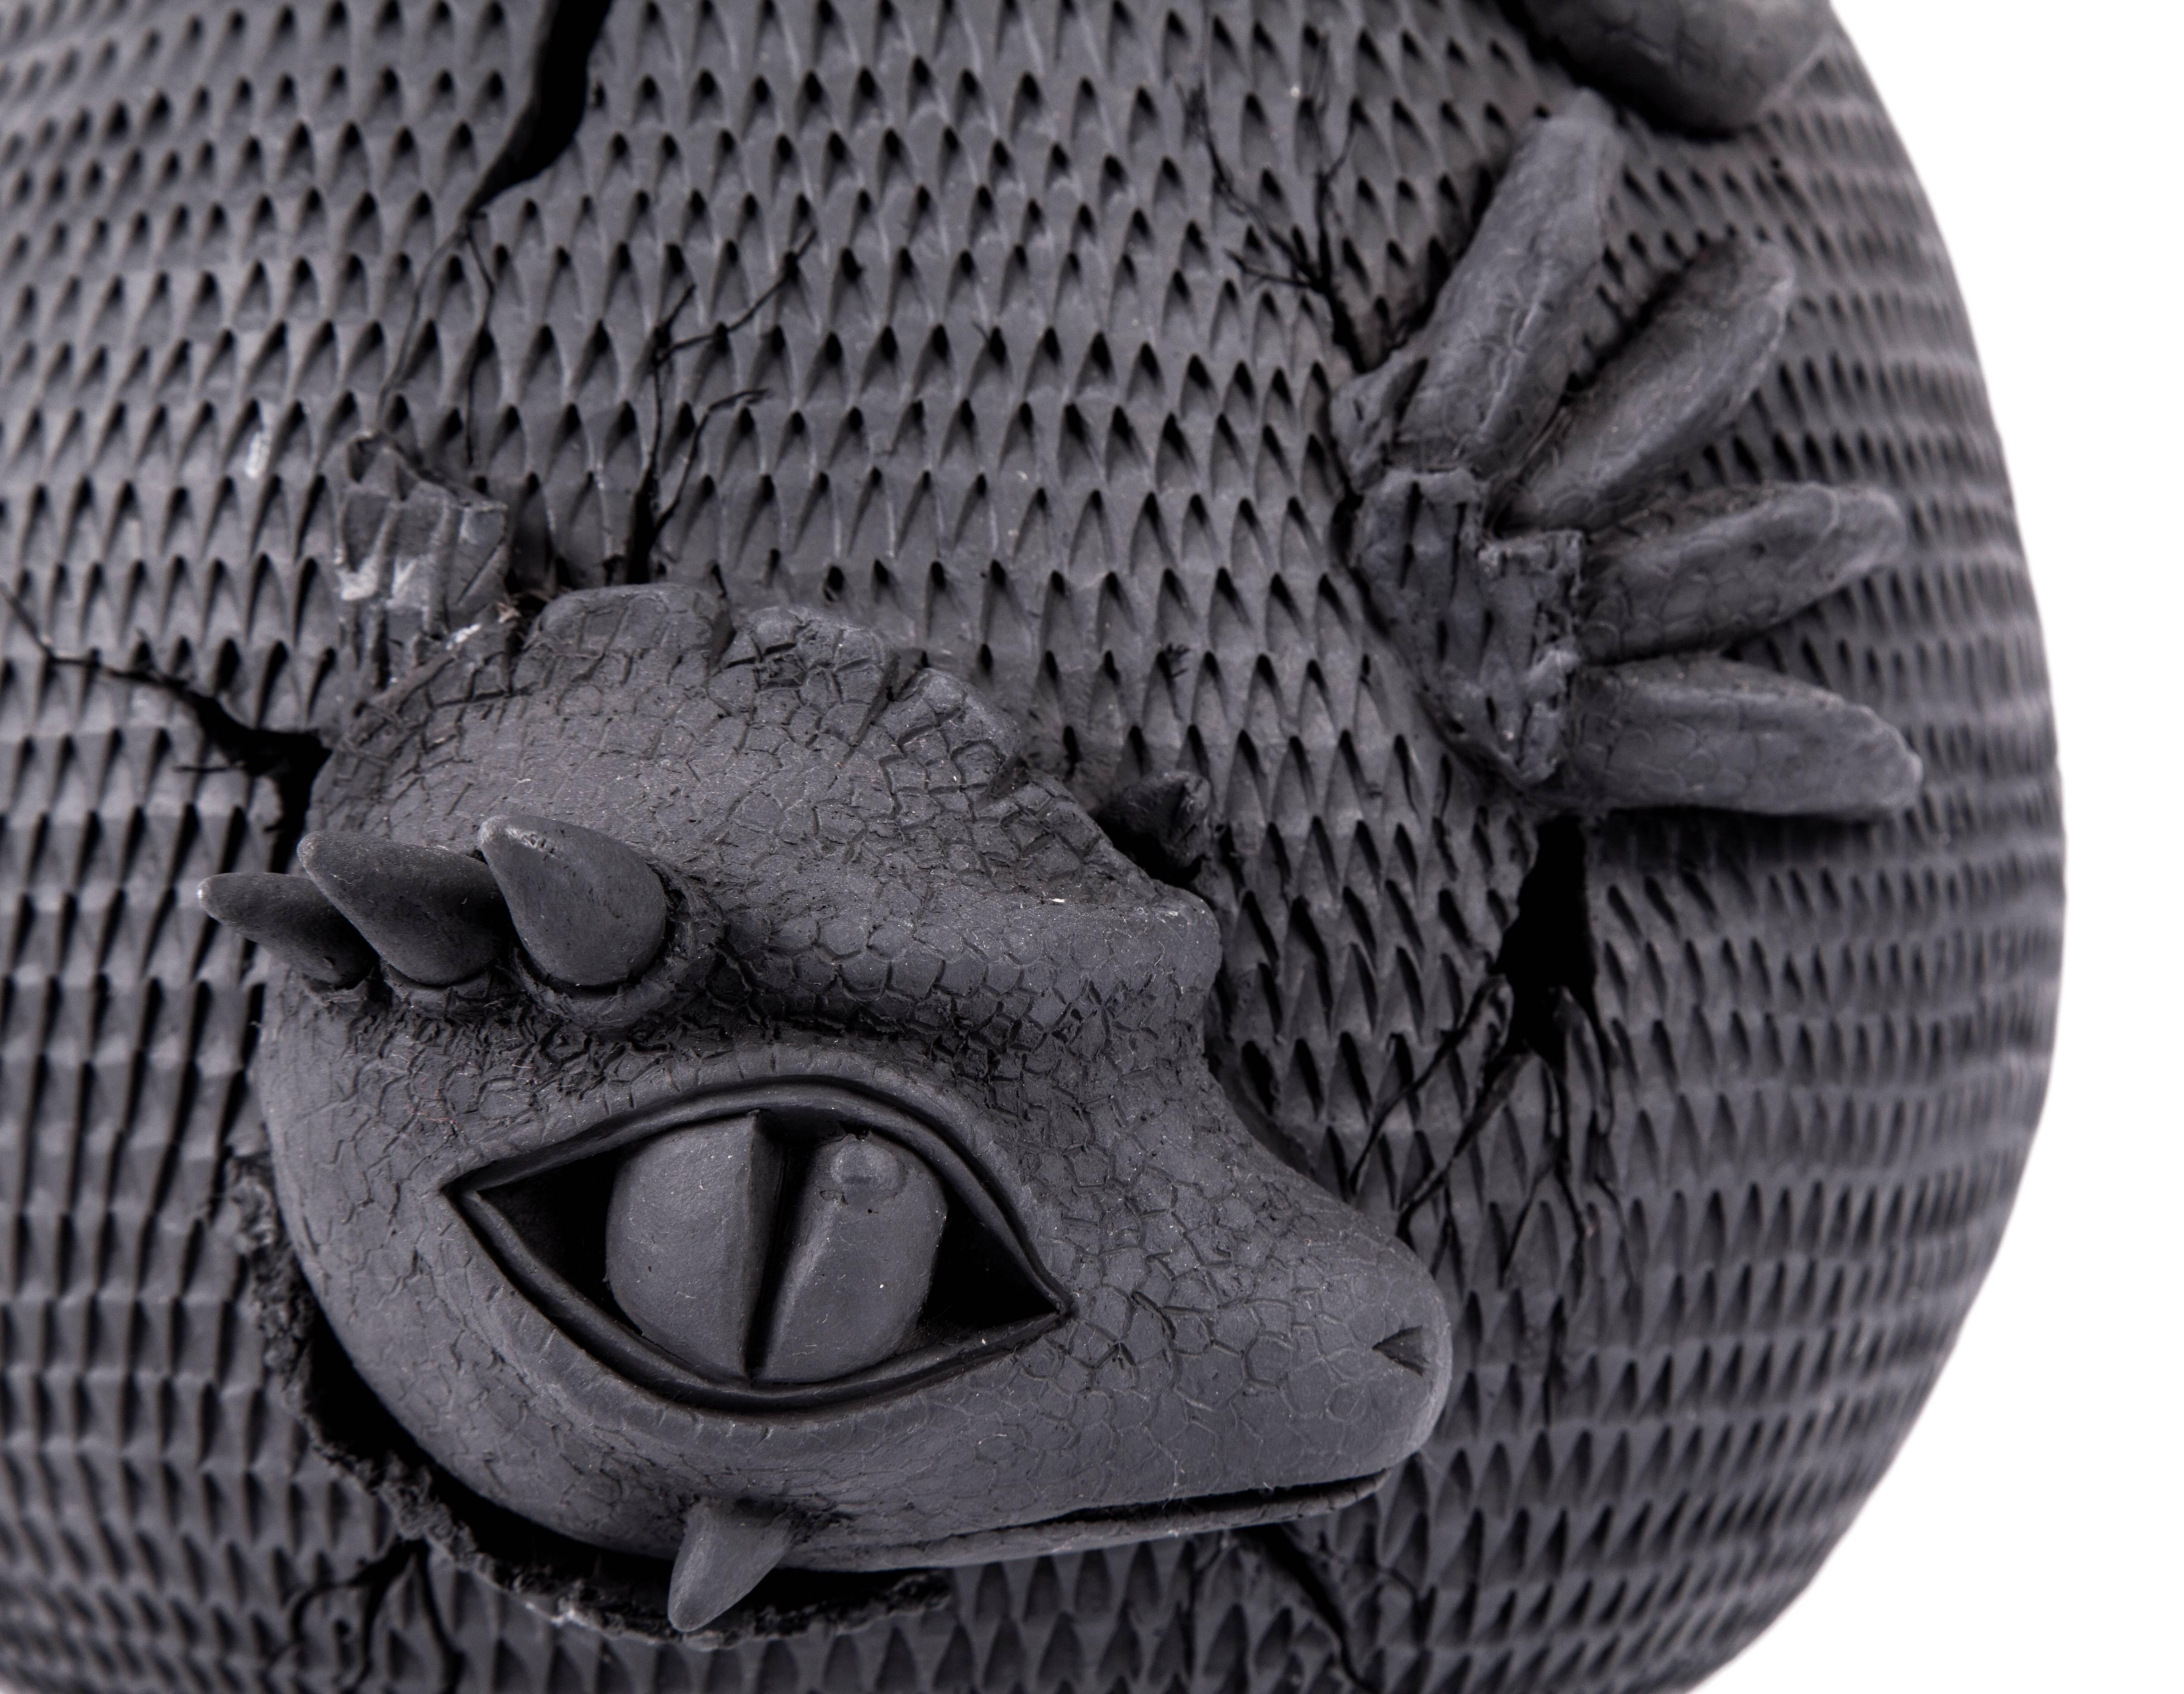 8'' Dragon / Ceramic Black Clay Mexican Folk Art - Sculpture by Omar Fabian Canseco